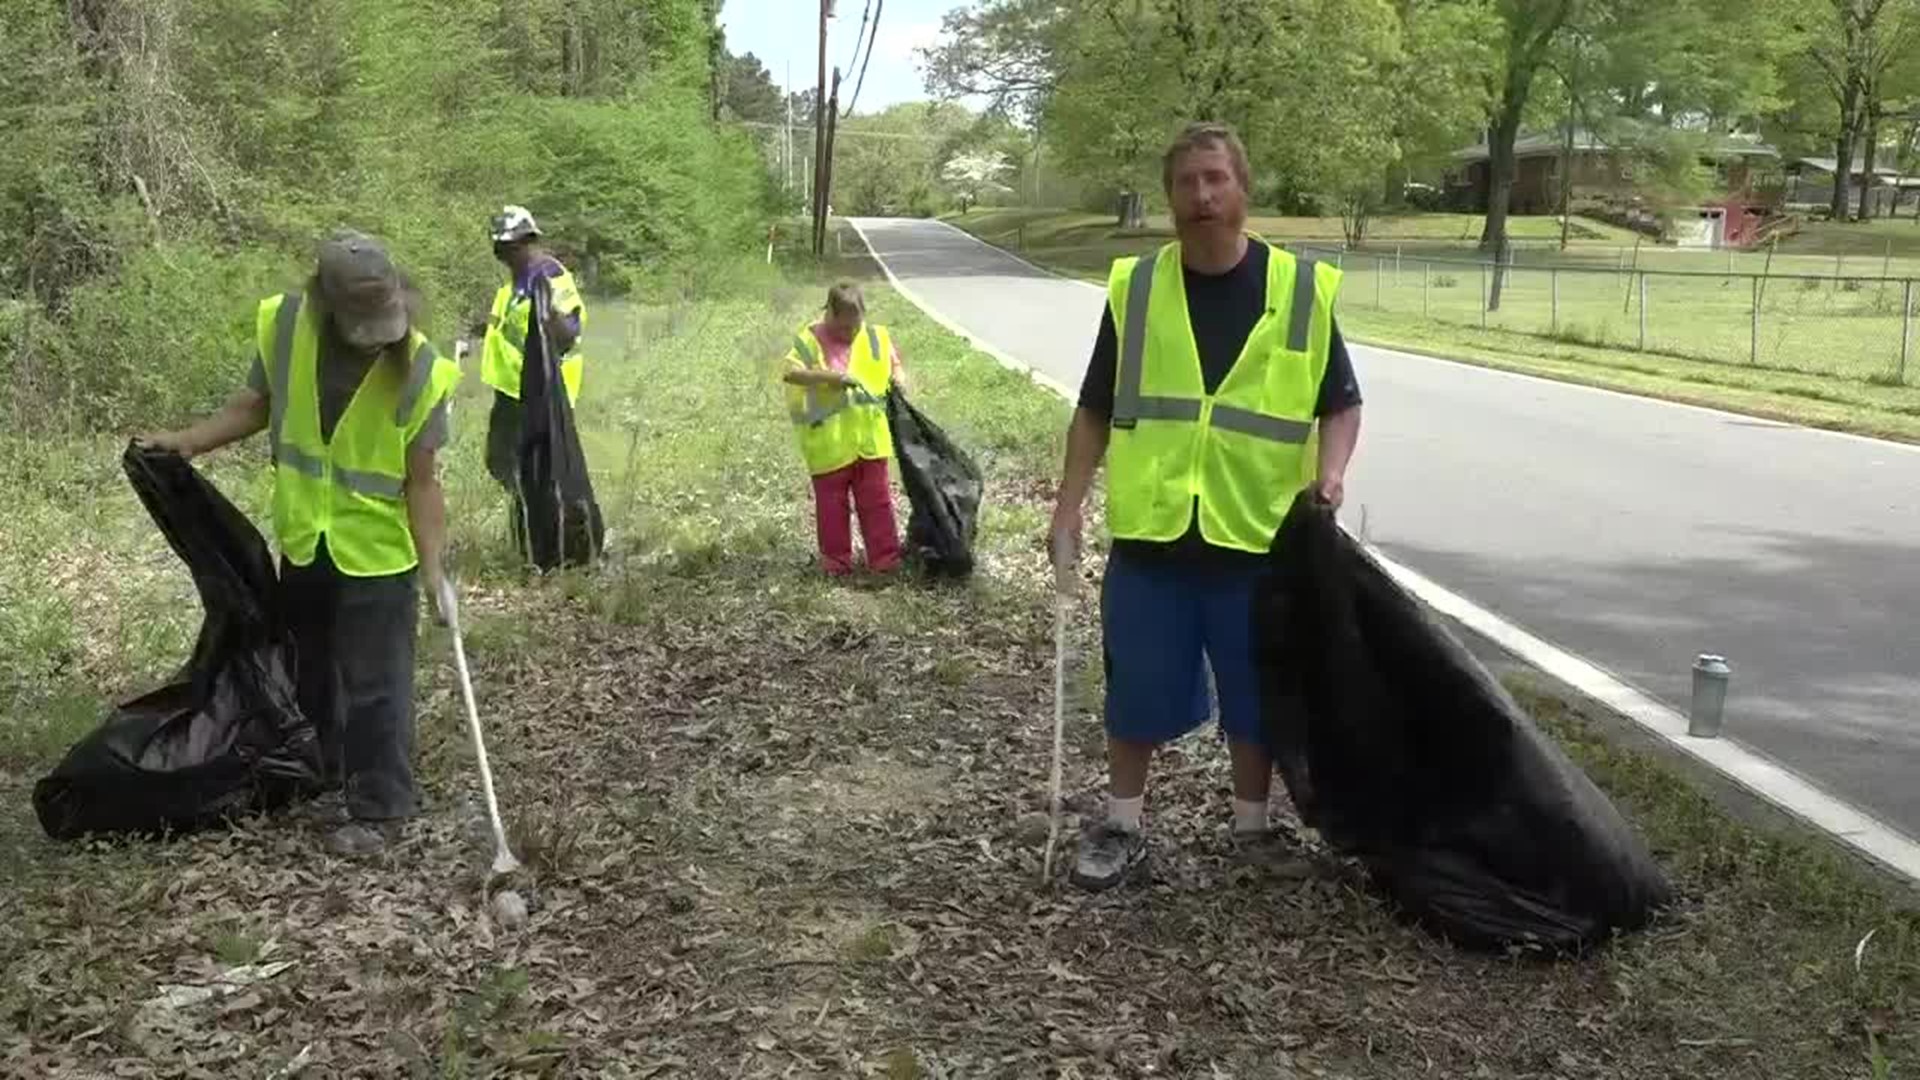 'I'm giving back and making money': Homeless begin job picking up trash in Little Rock